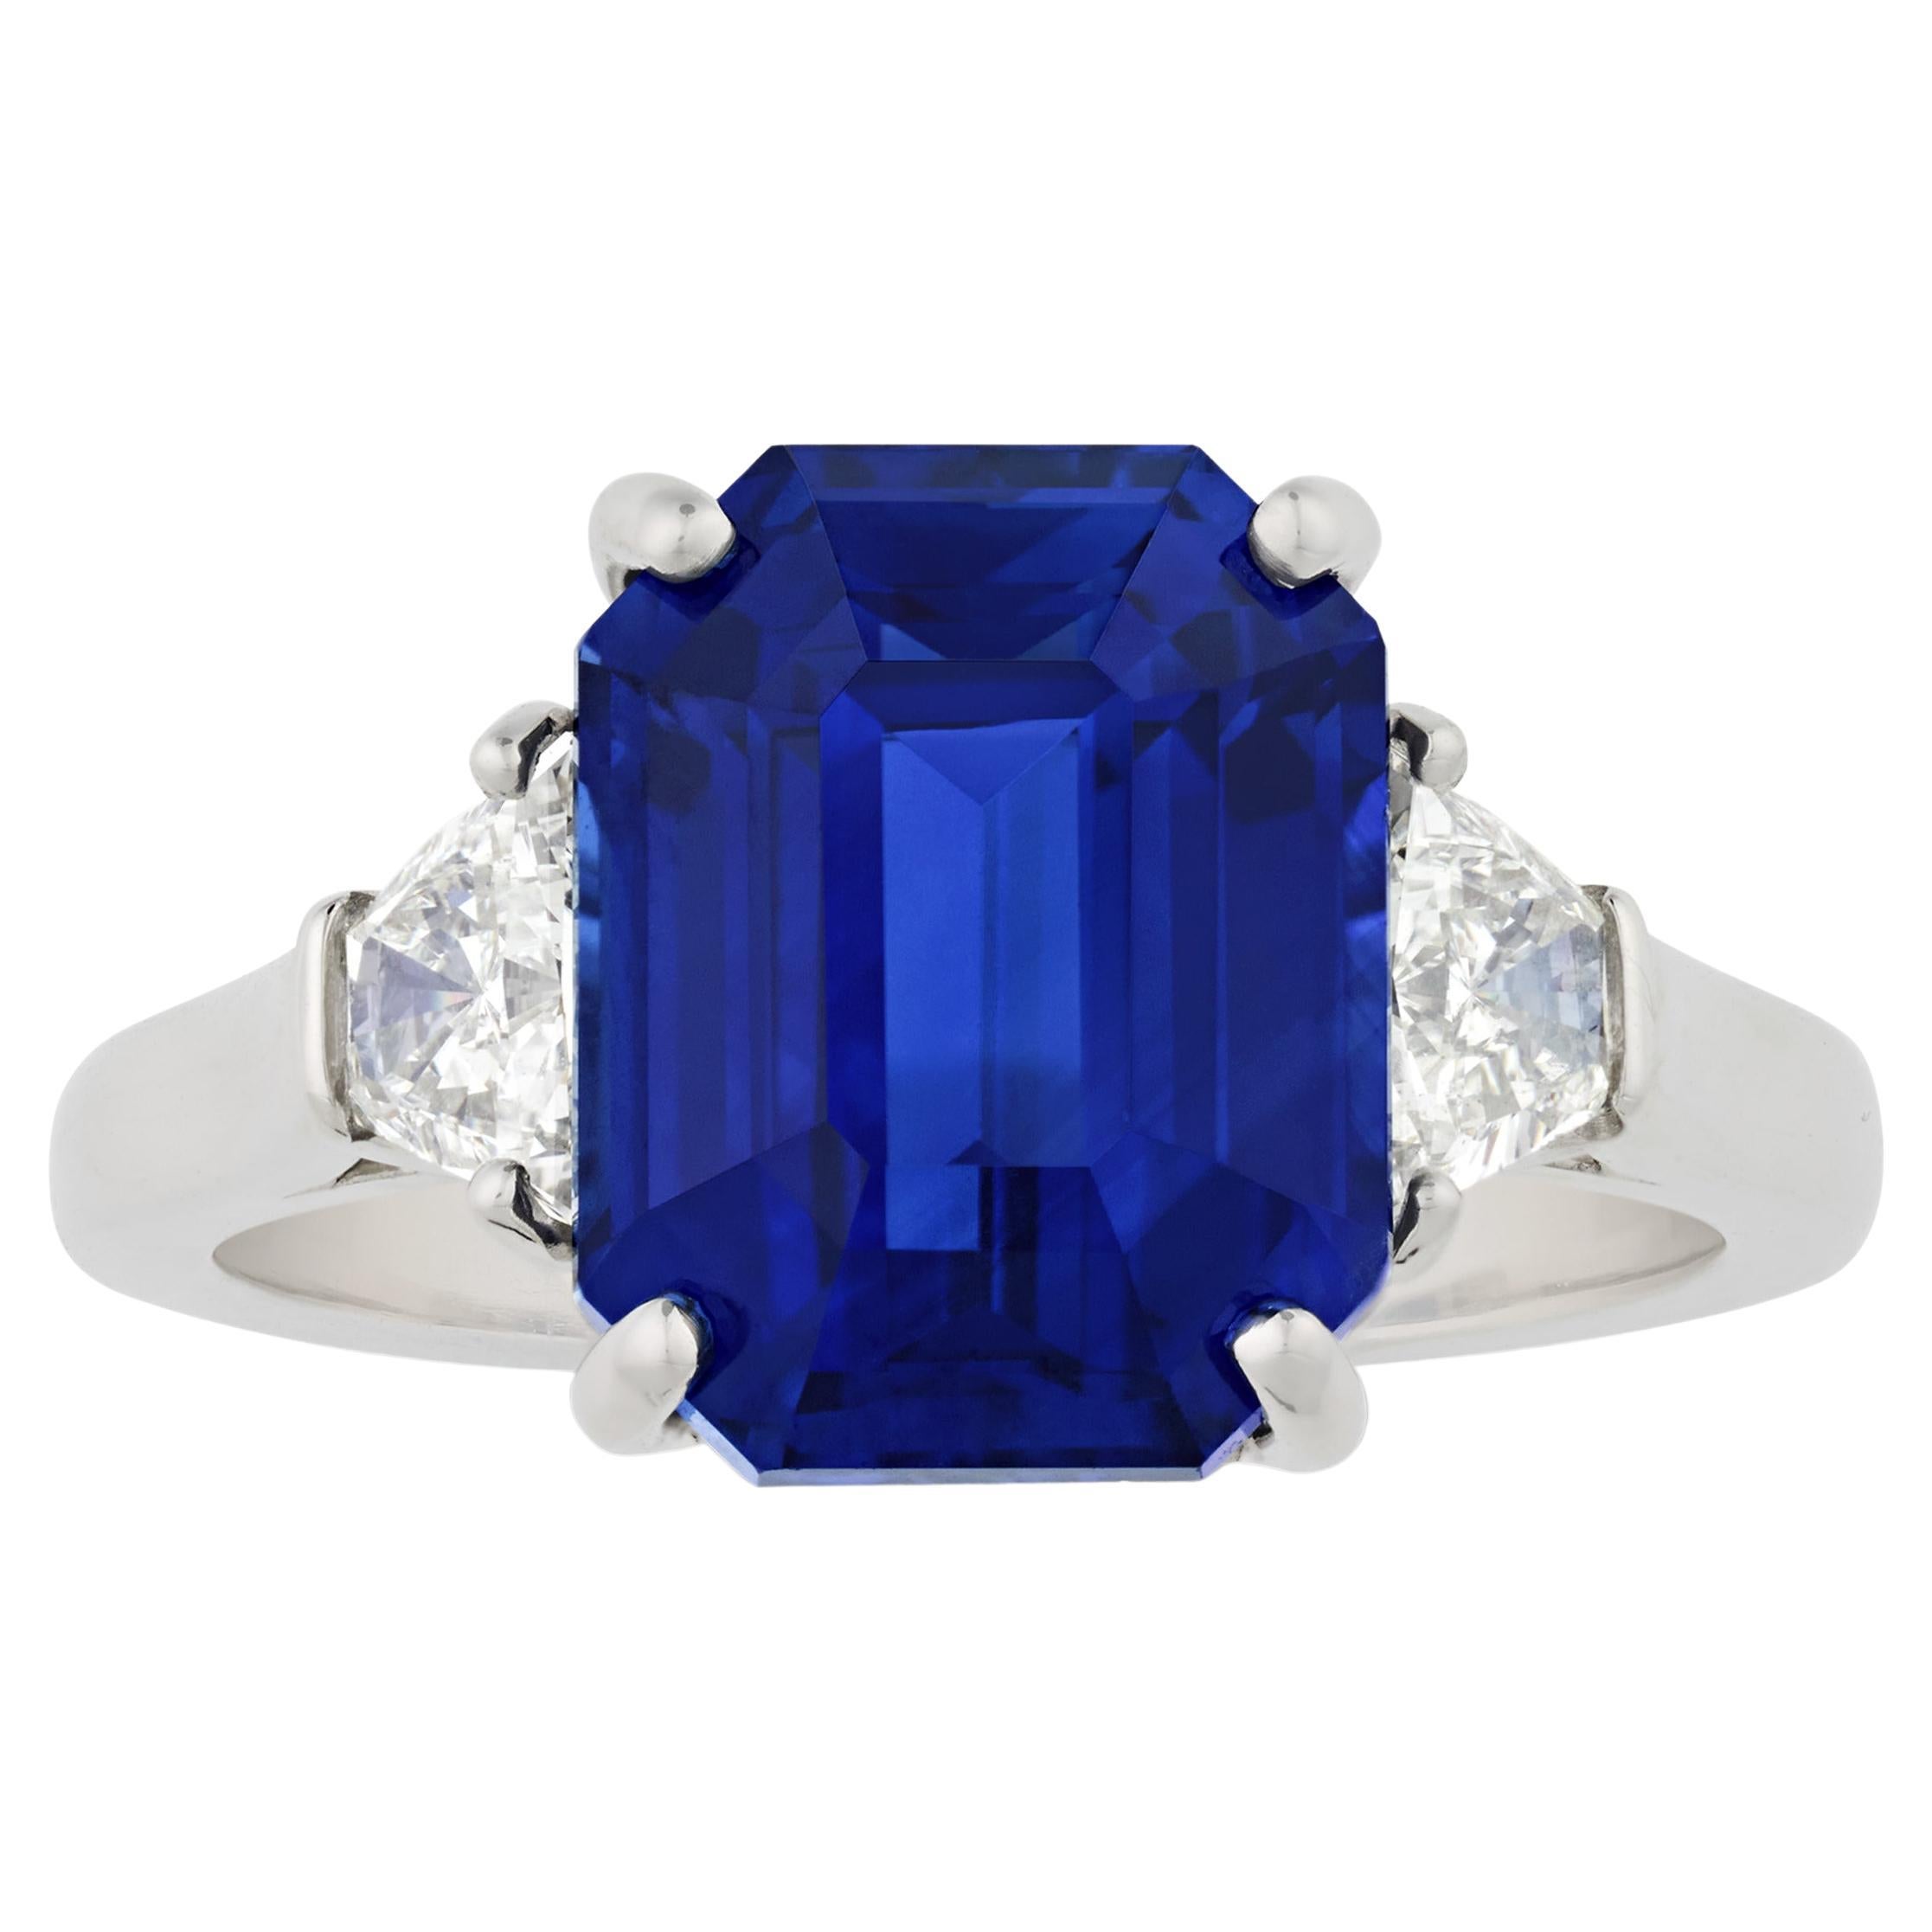 Oscar Heyman Ceylon Sapphire Ring, 7.57 Carats For Sale